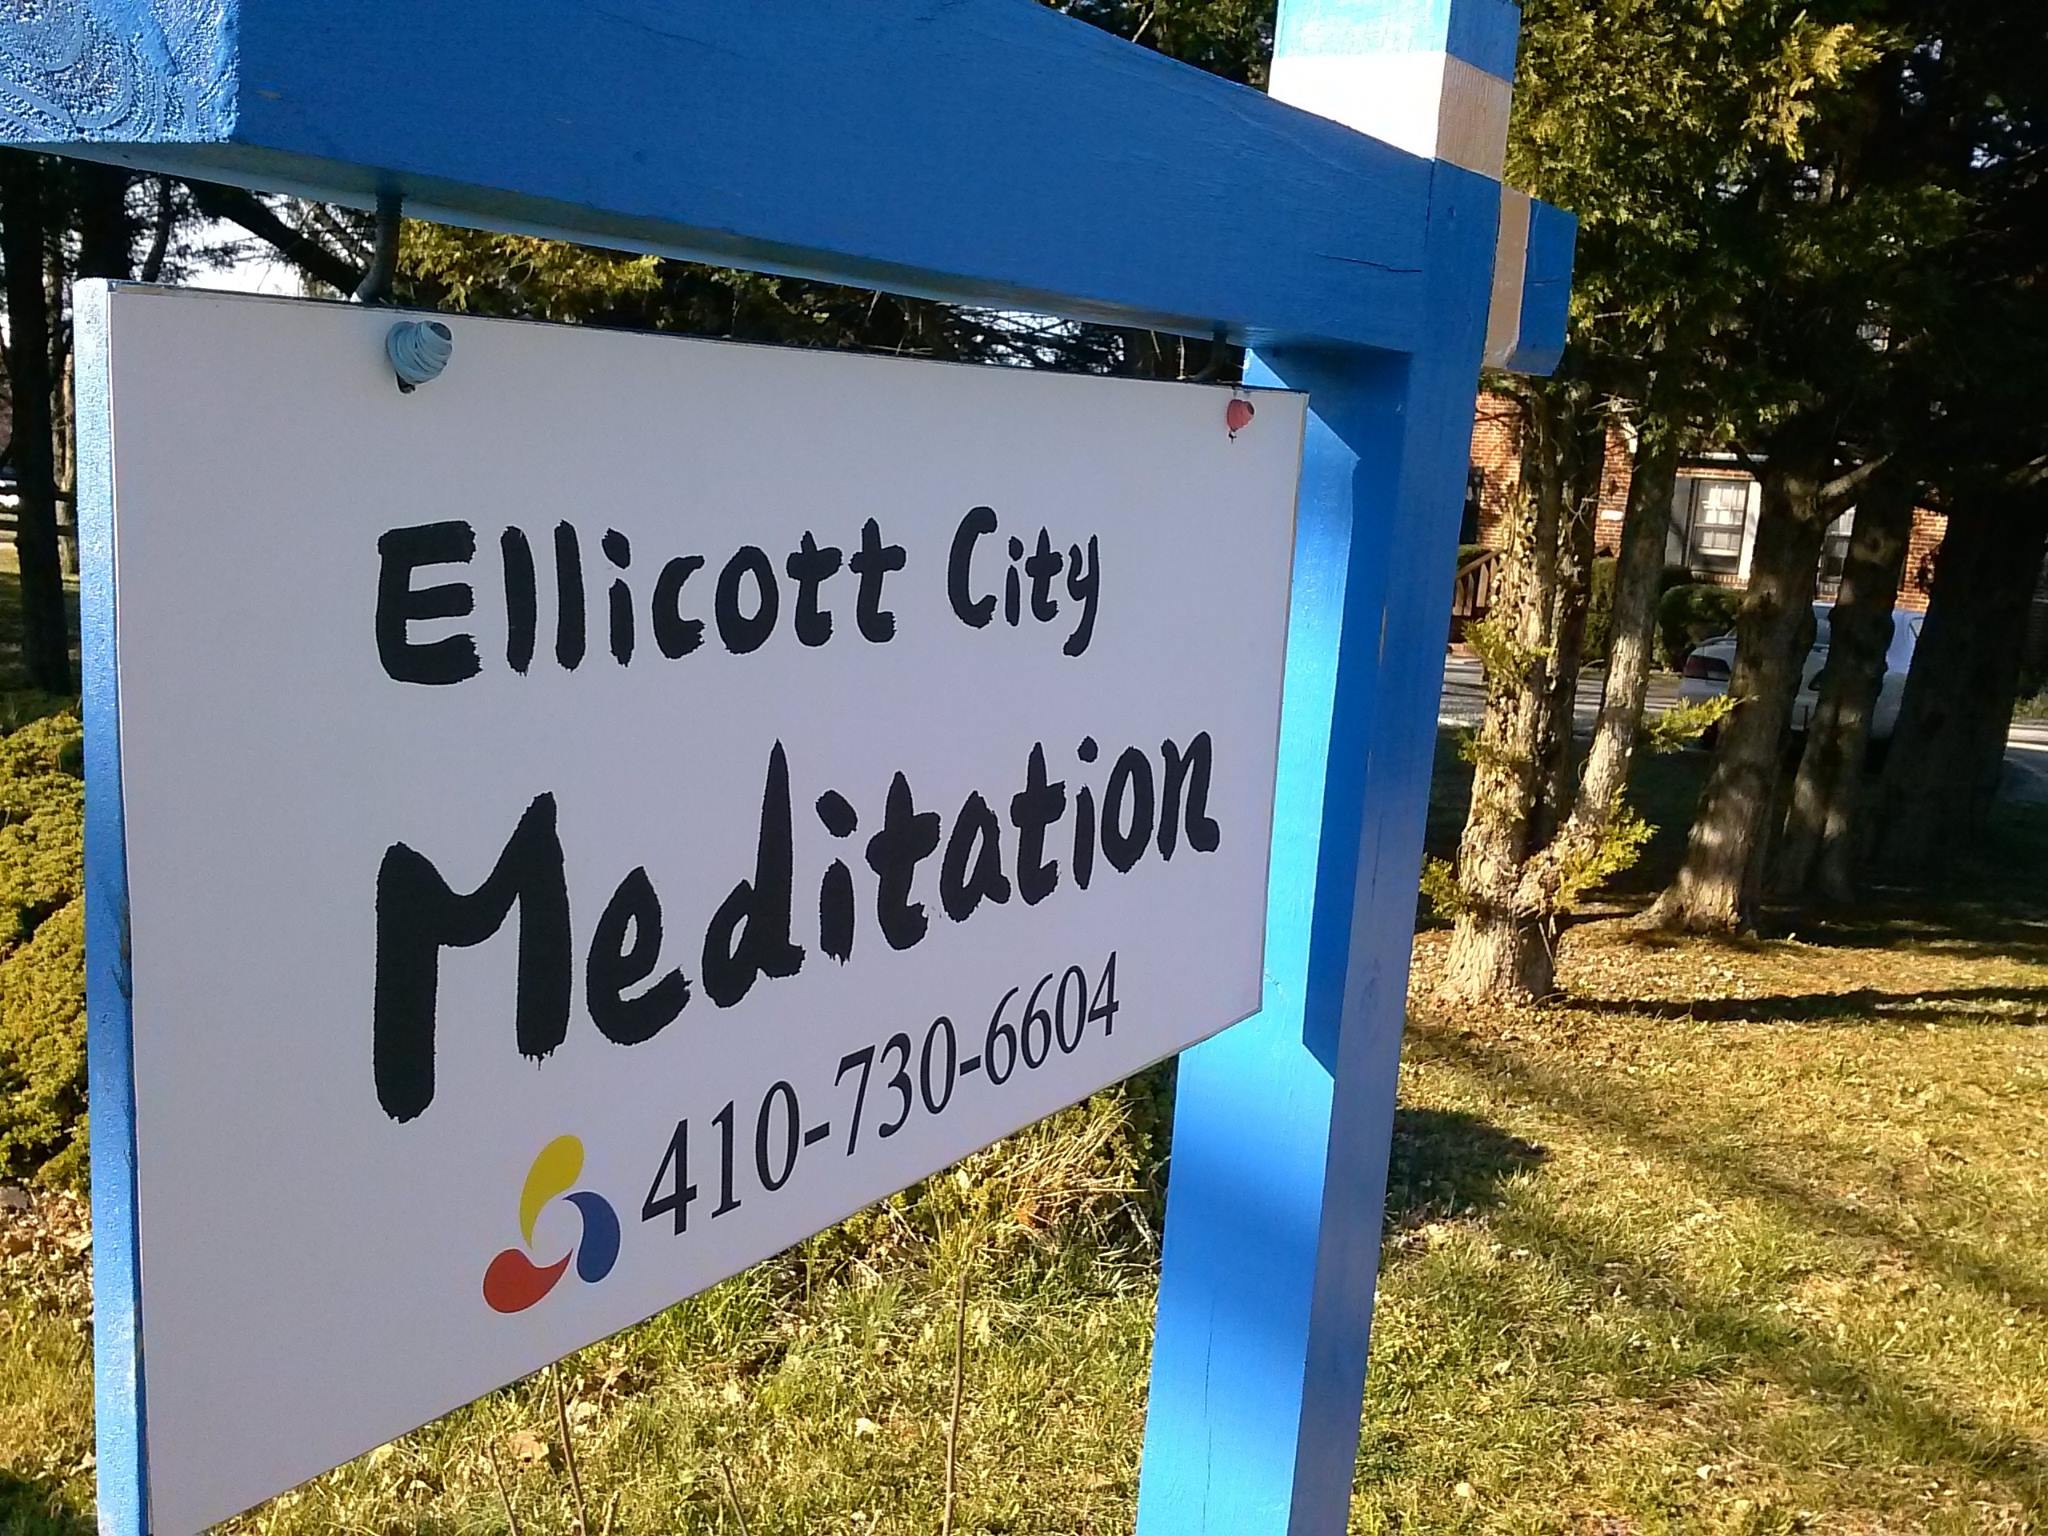 Ellicott City Meditation Center 